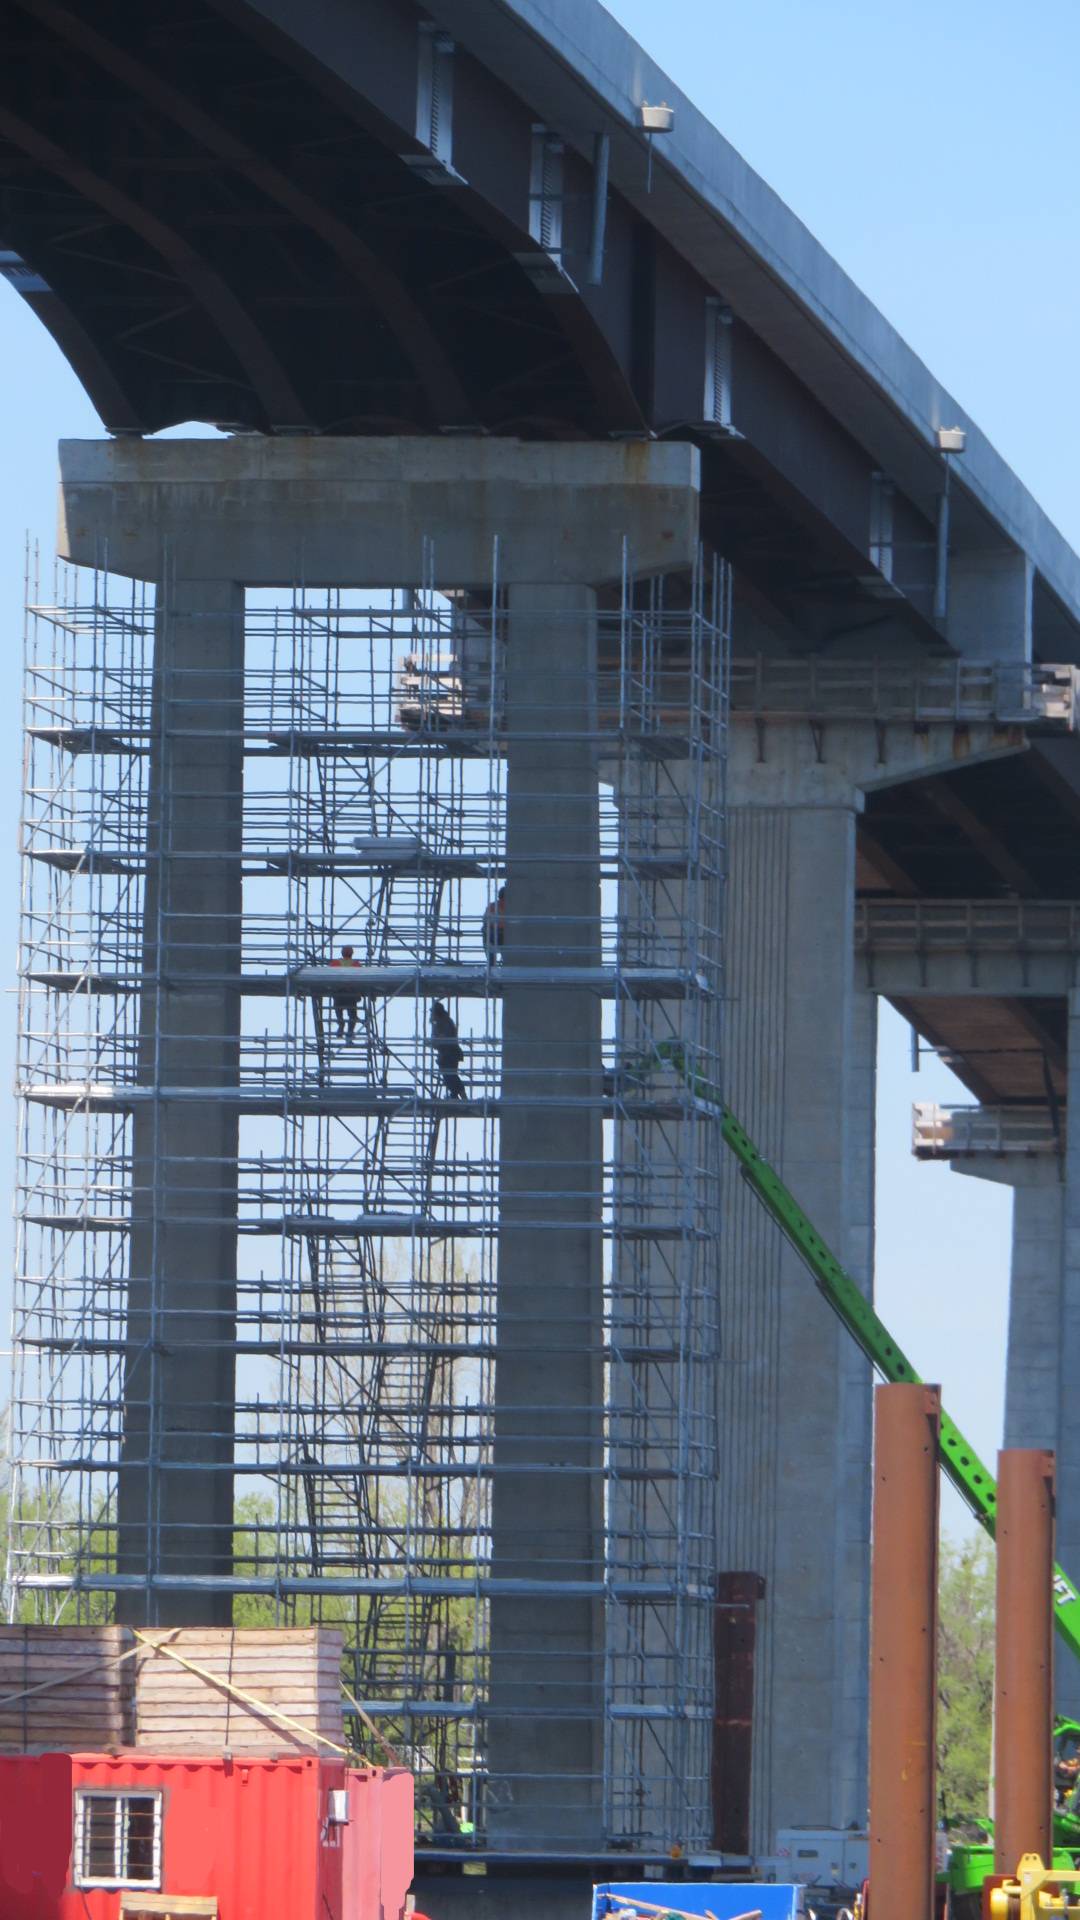 Pier 9 scaffolding installation, near completion